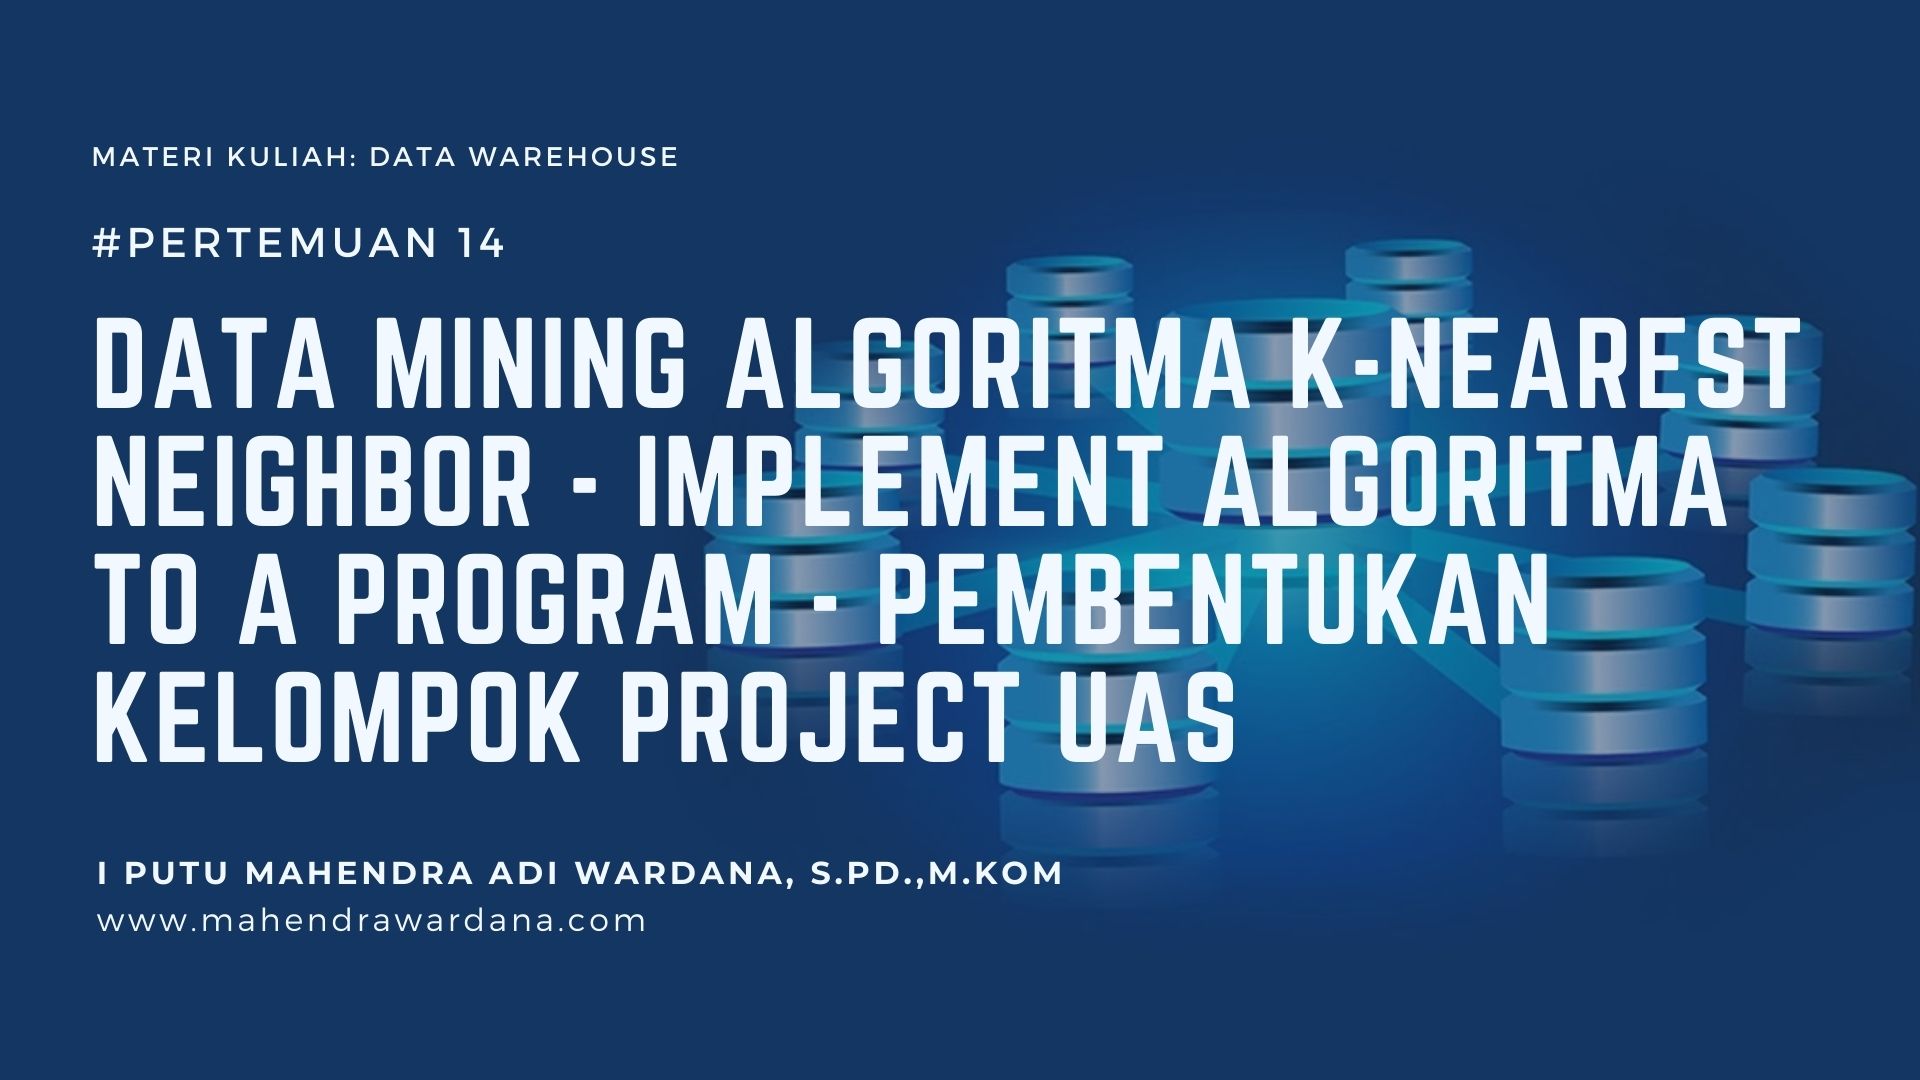 Pertemuan 14 - Data Mining Algoritma K-Nearest Neighbor - Implement Algoritma to a Program - Pembentukan Kelompok Project UAS